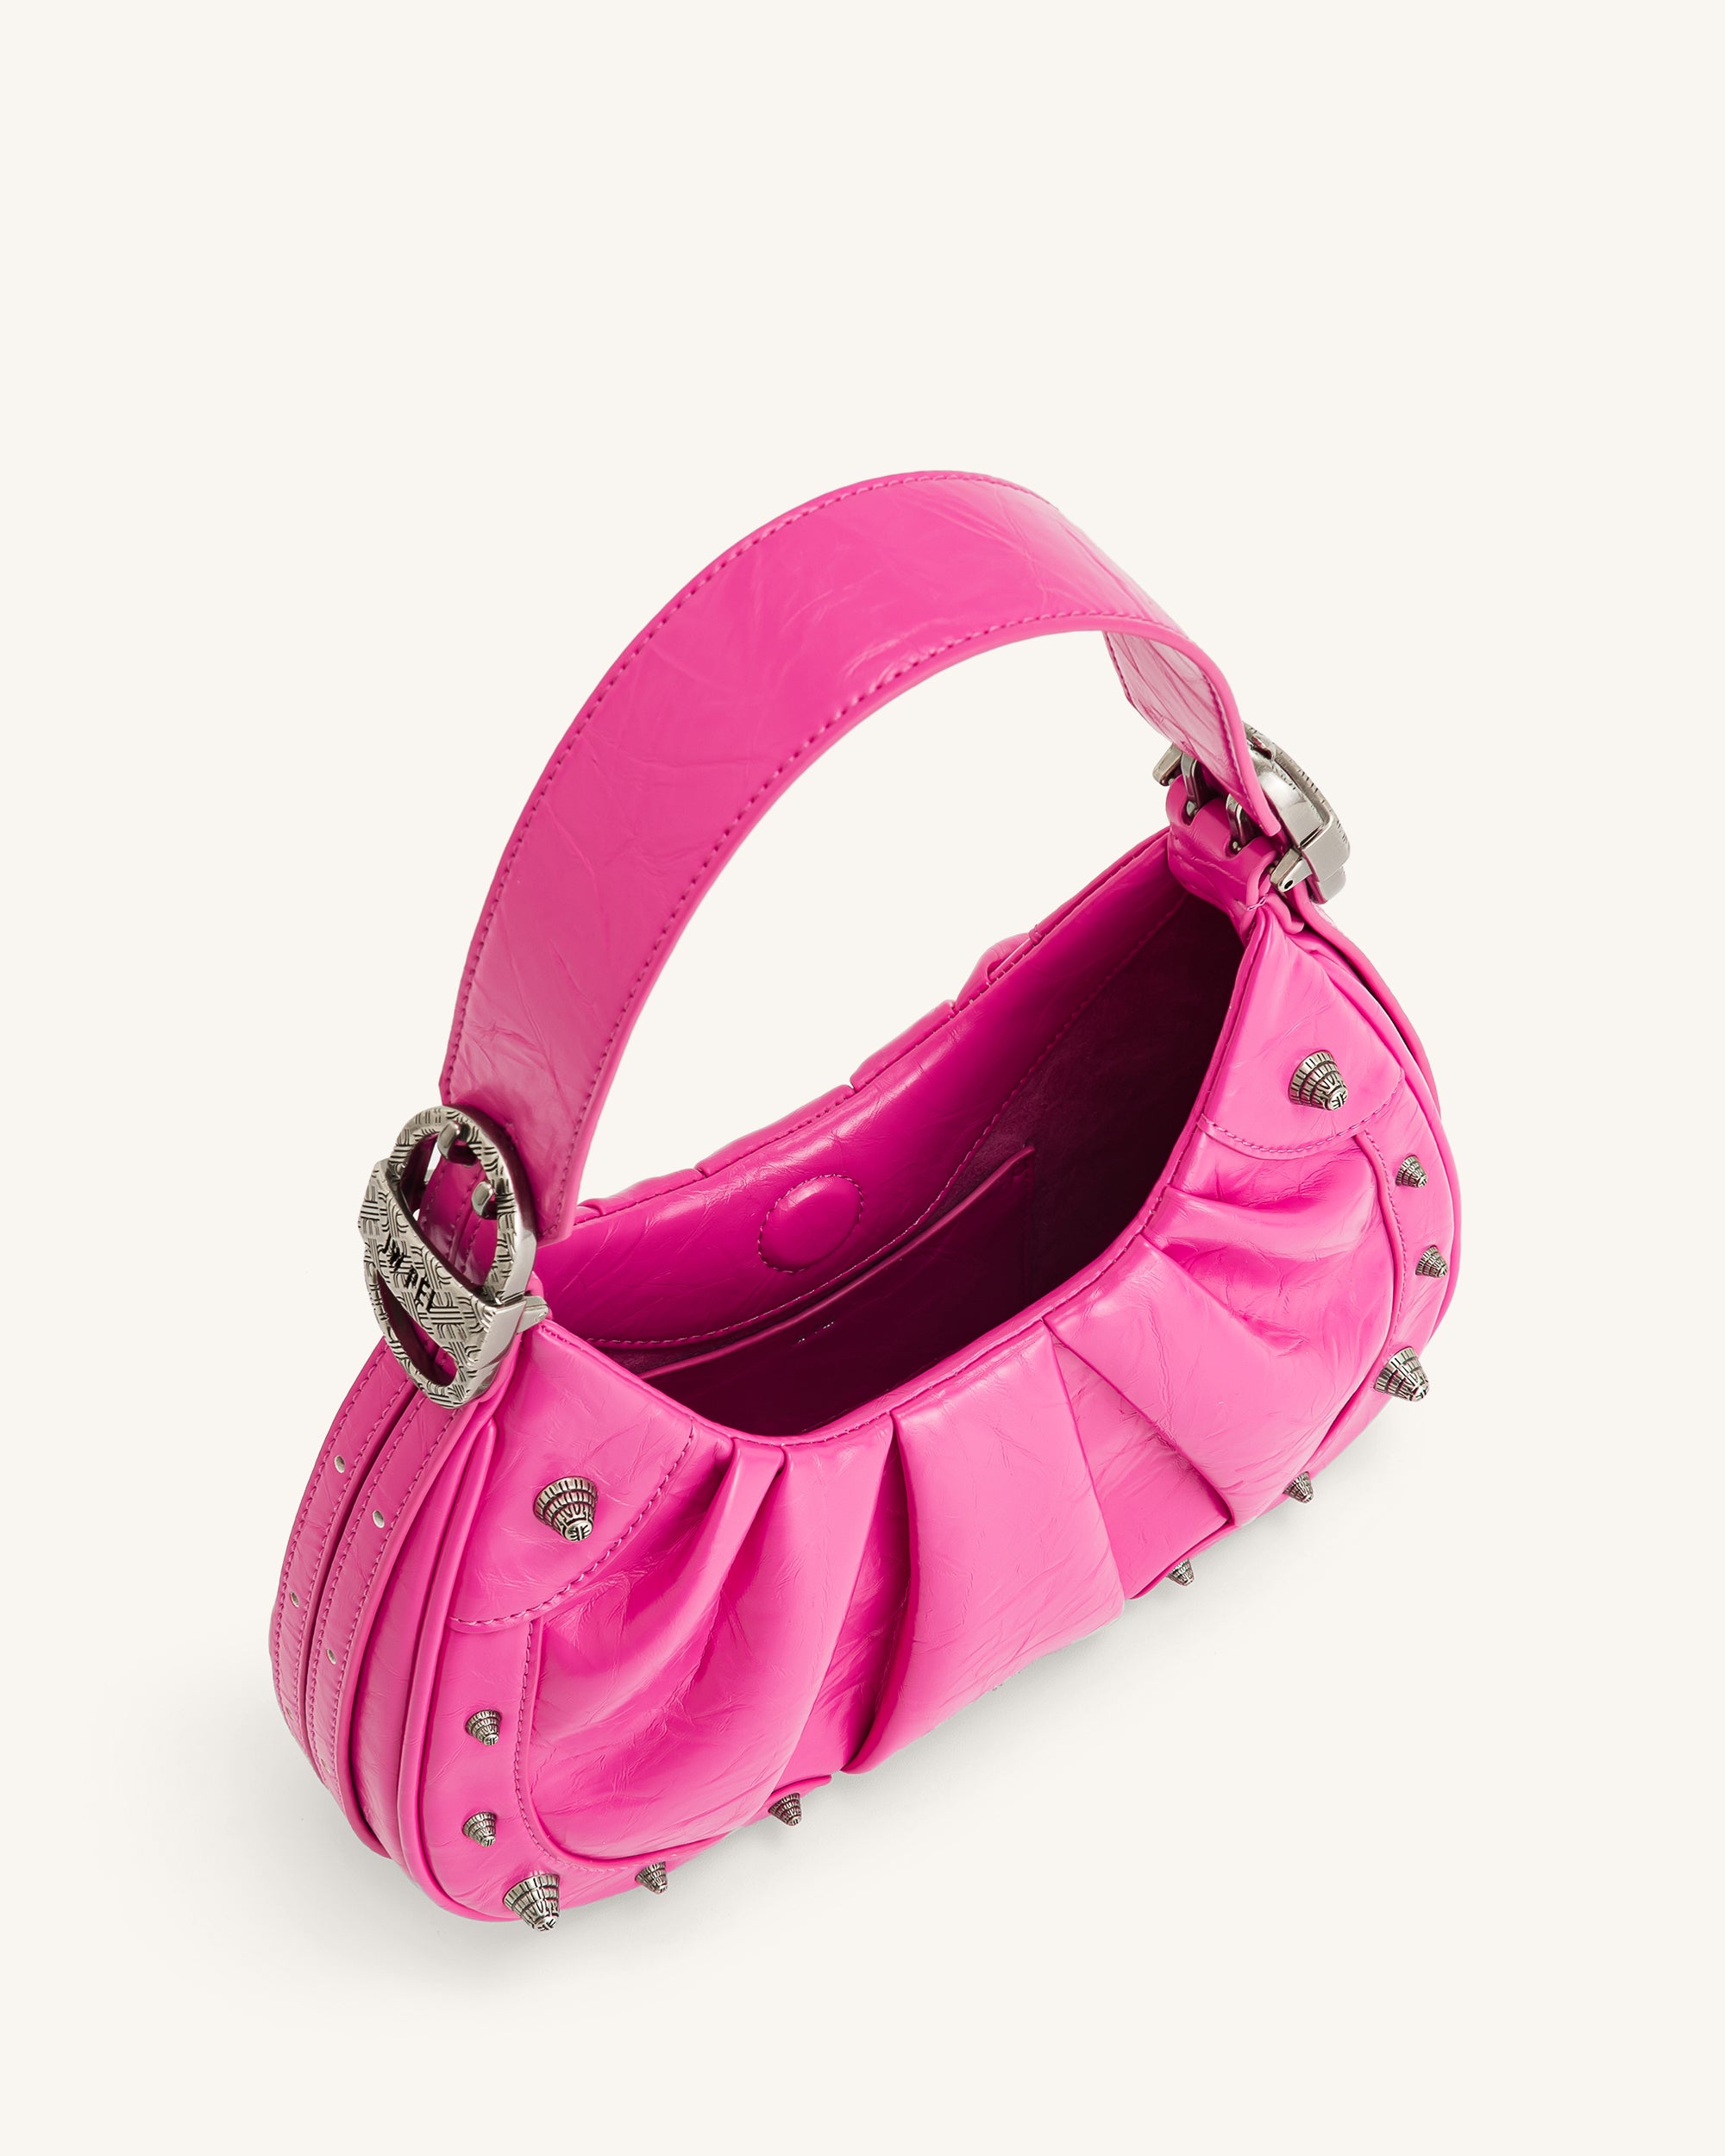 Gabbi Crushed Ruched Hobo Handbag - Bright Pink - JW PEI